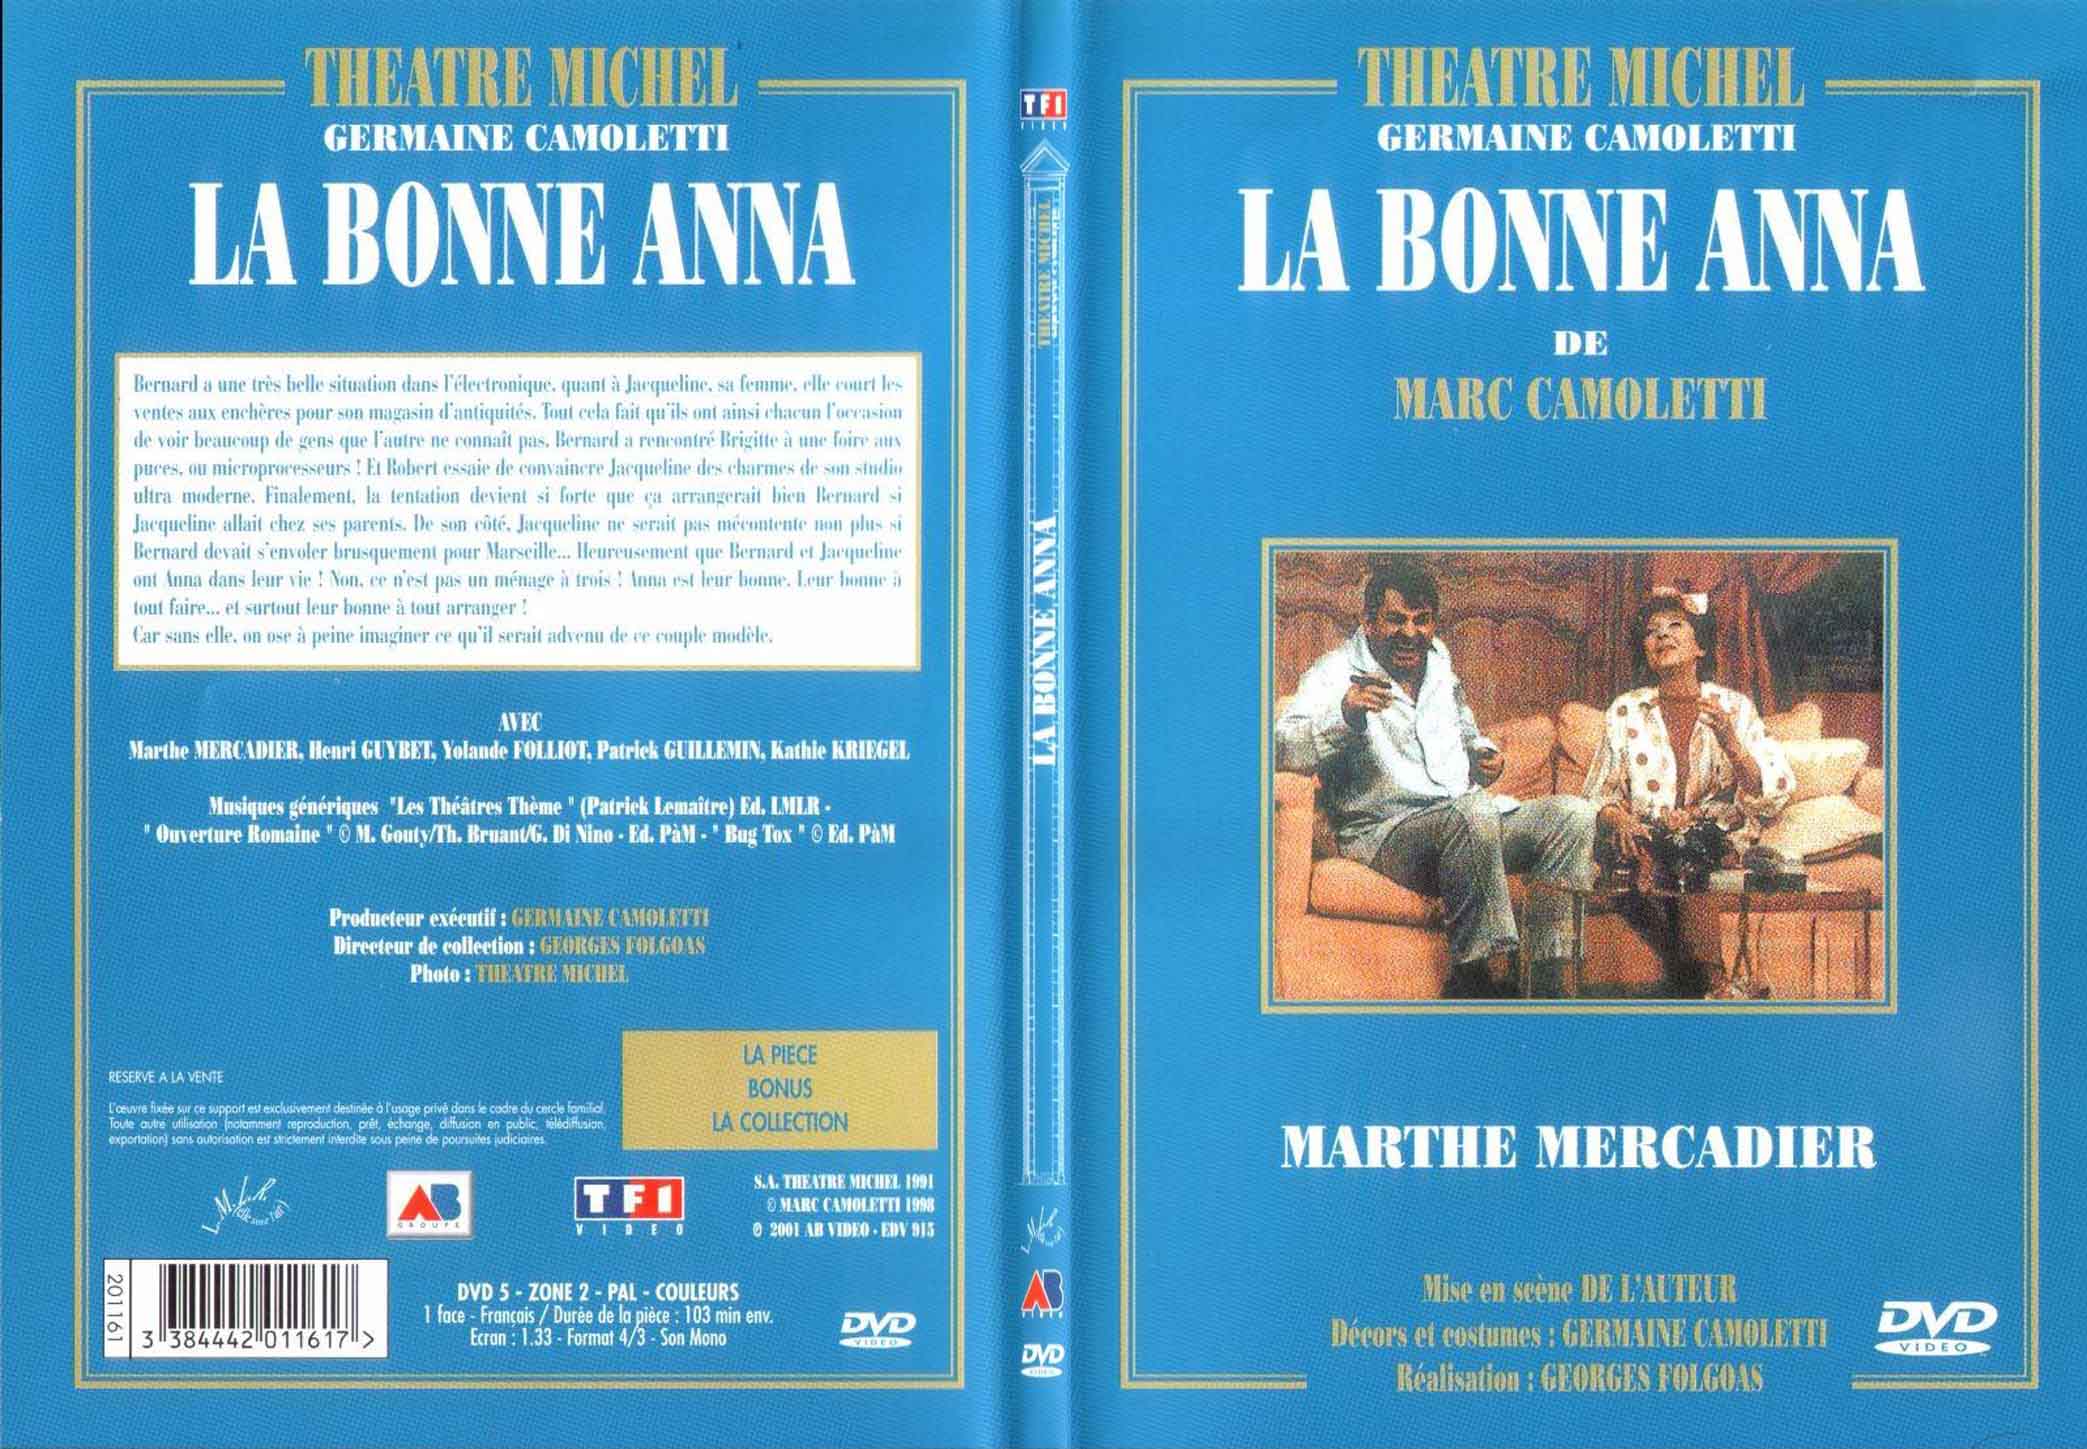 Jaquette DVD Theatre Michel - la bonne anna - SLIM